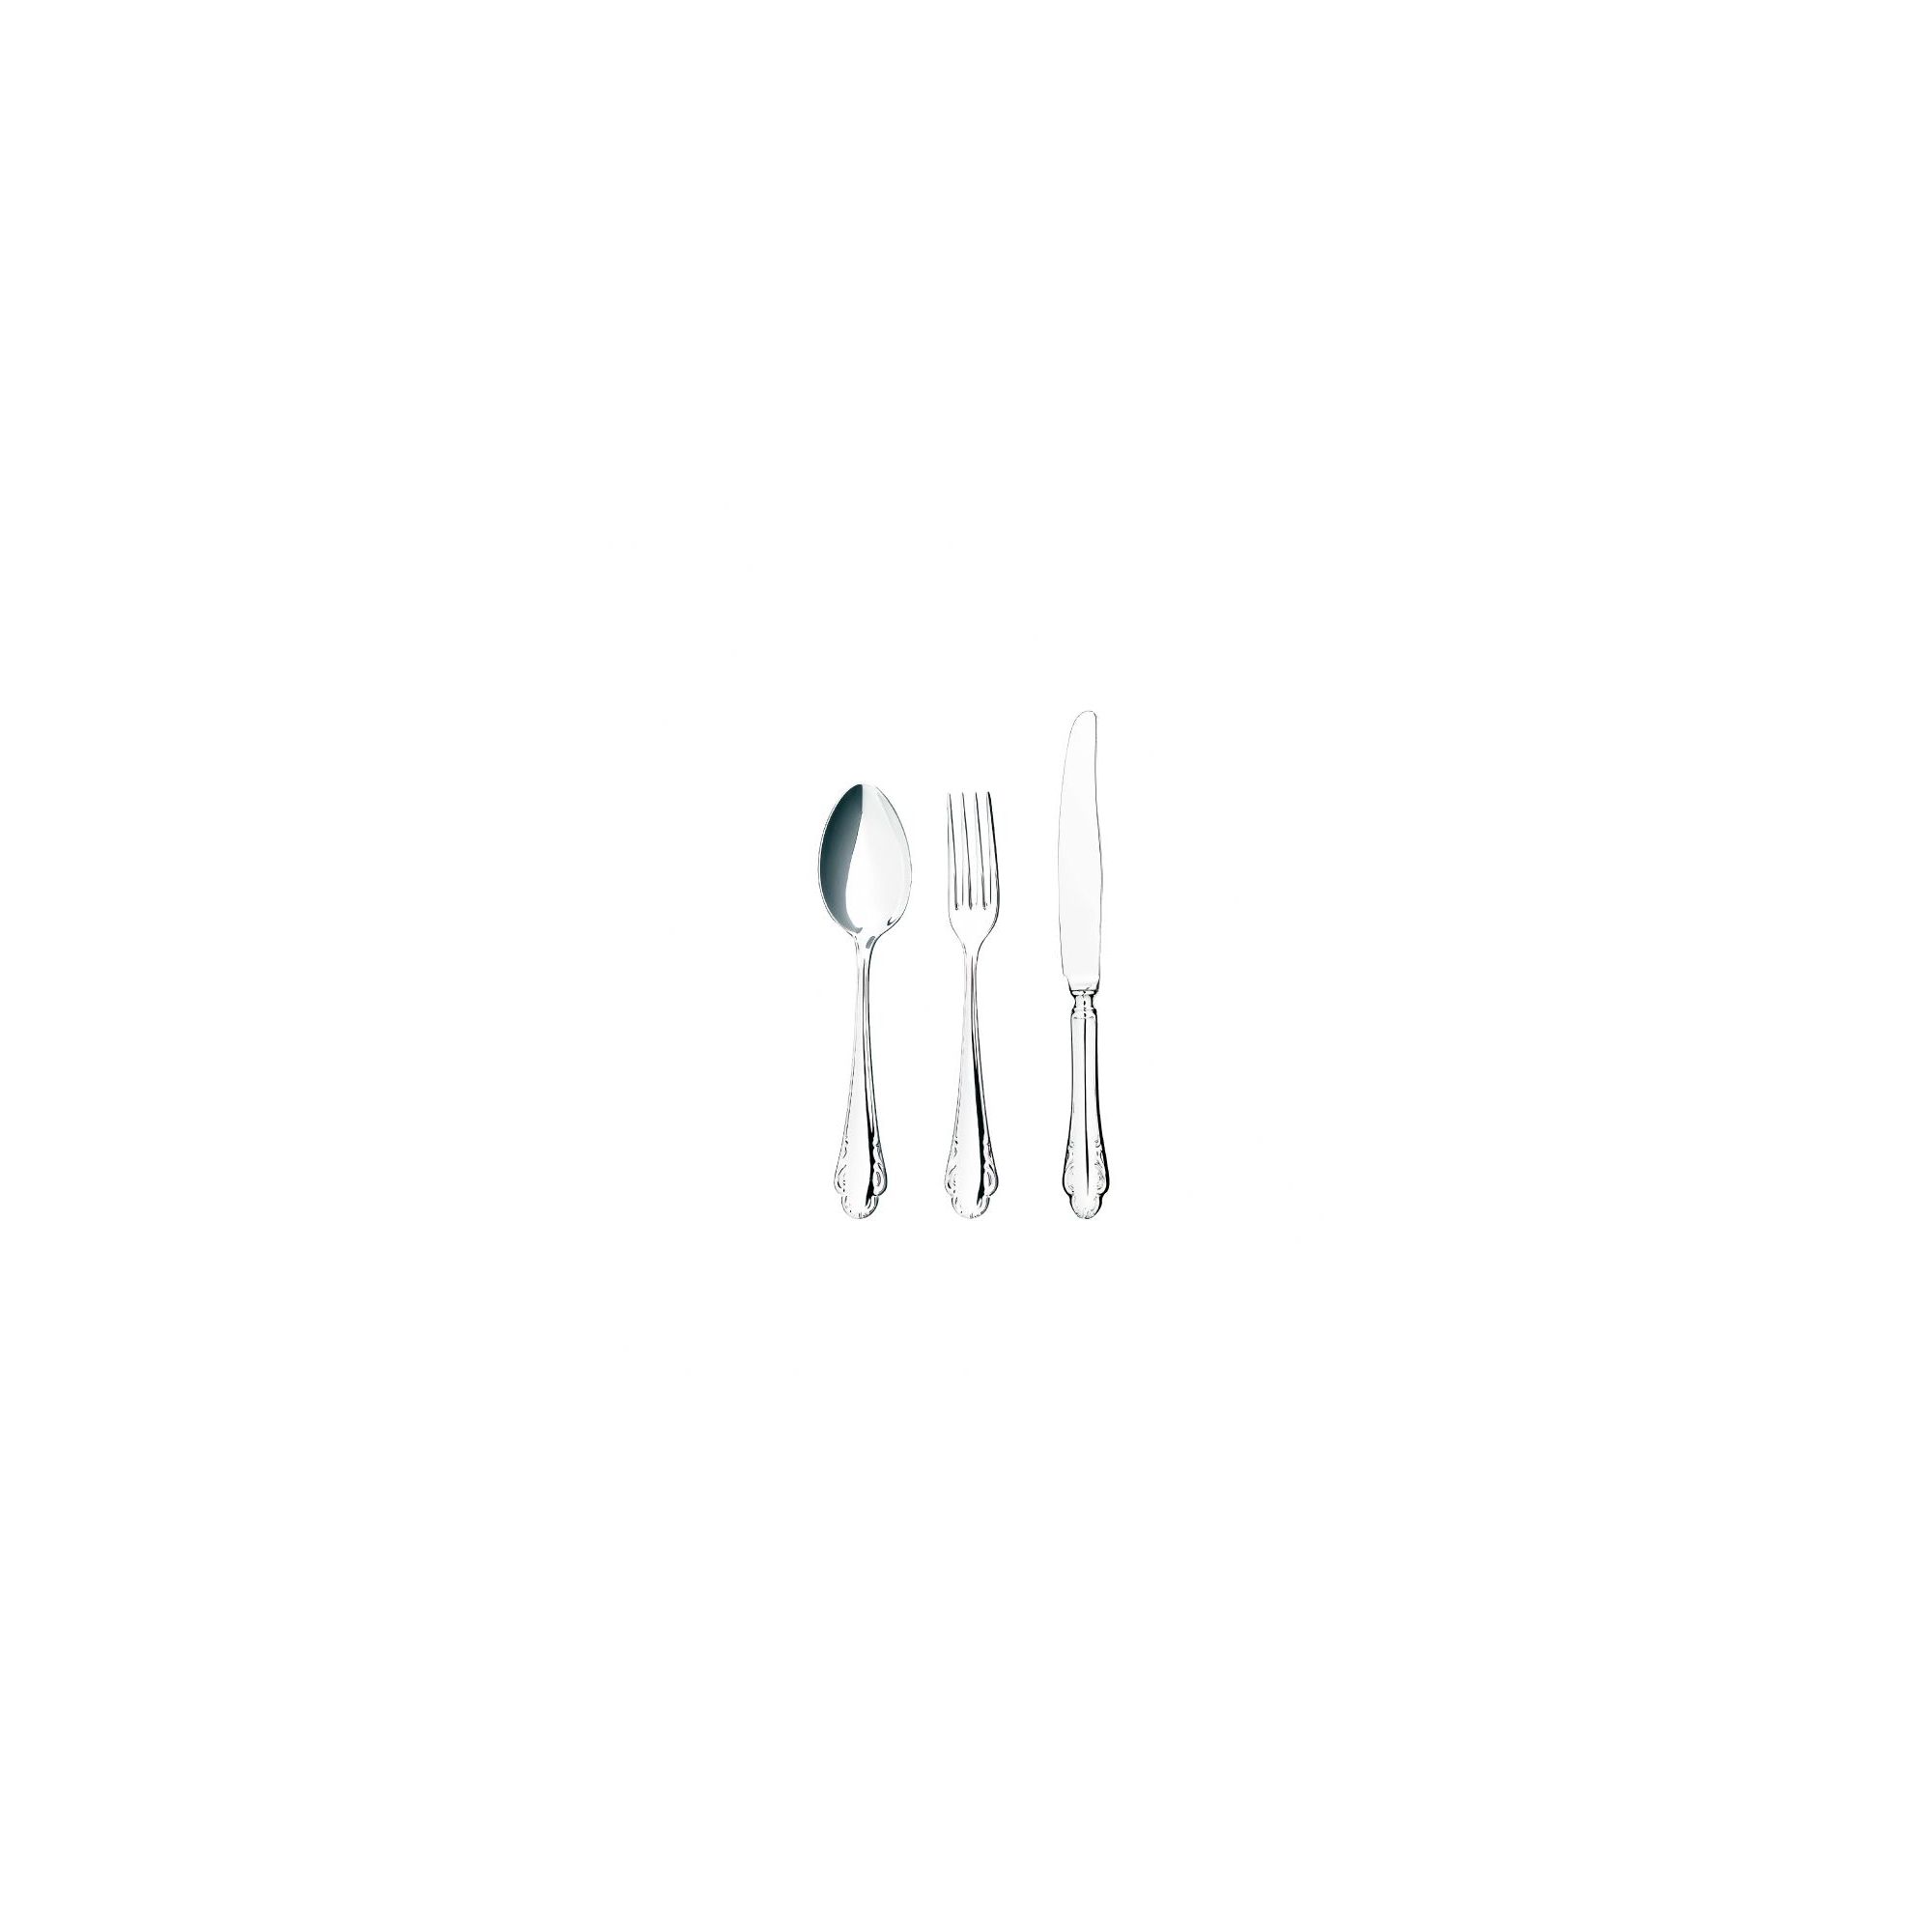 Mema/GAB Haga 12 Piece Silver Plated Cutlery Set 1 at Tesco Direct